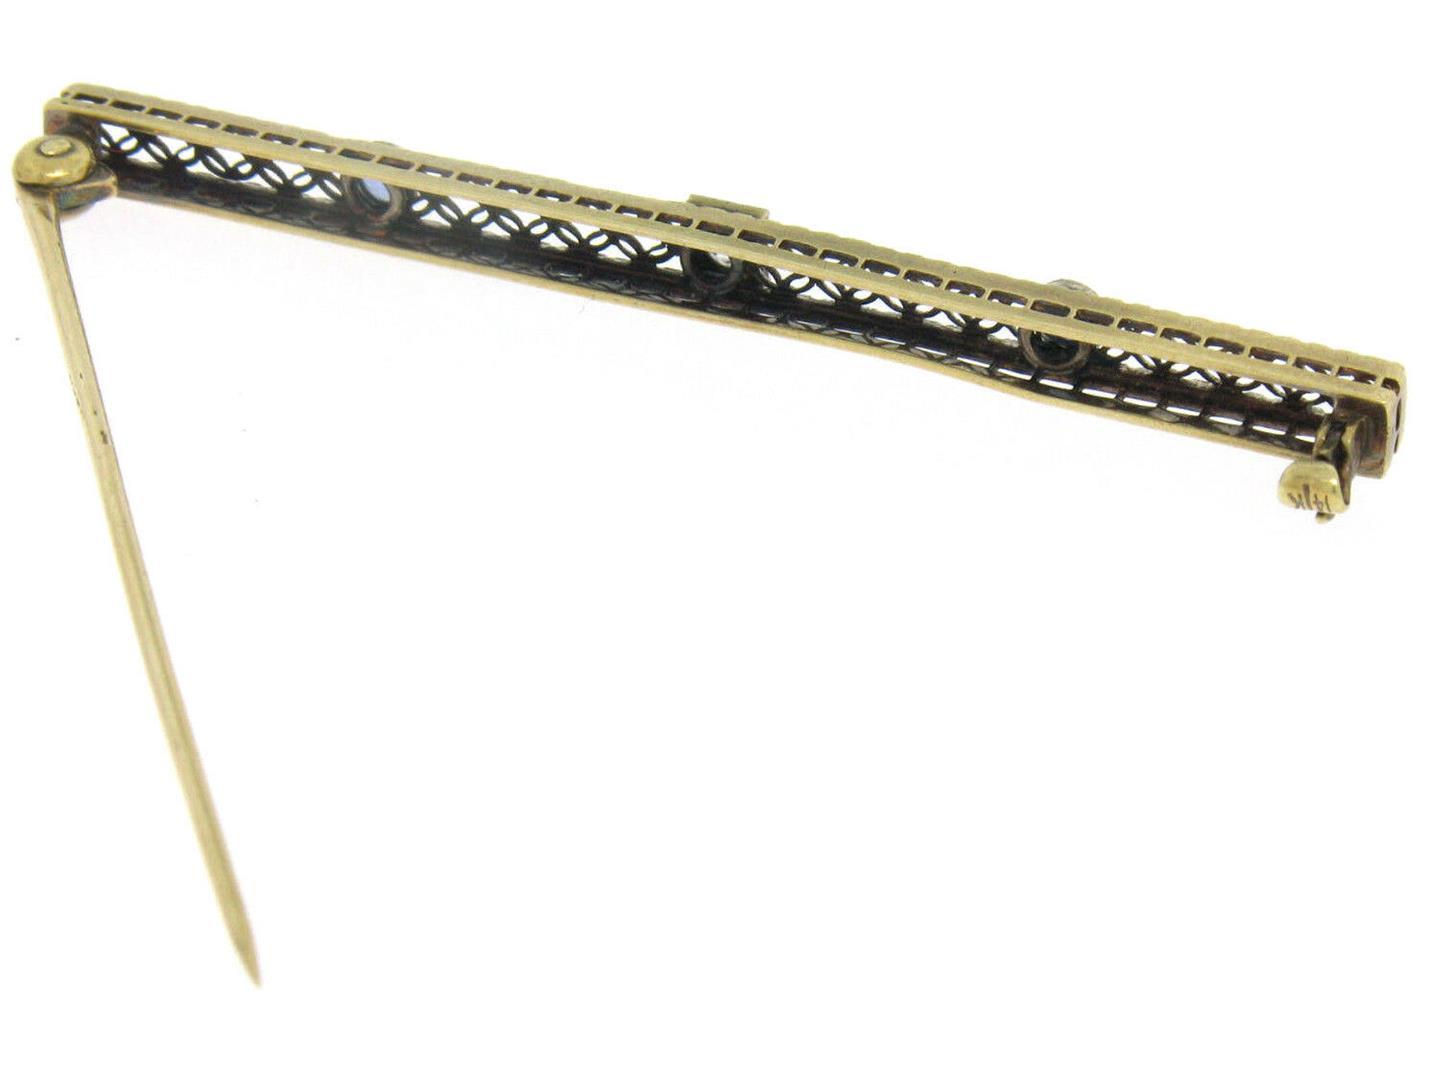 Antique Two Tone 14k Gold Diamond & Synthetic Sapphire Open Filigree Bar Pin